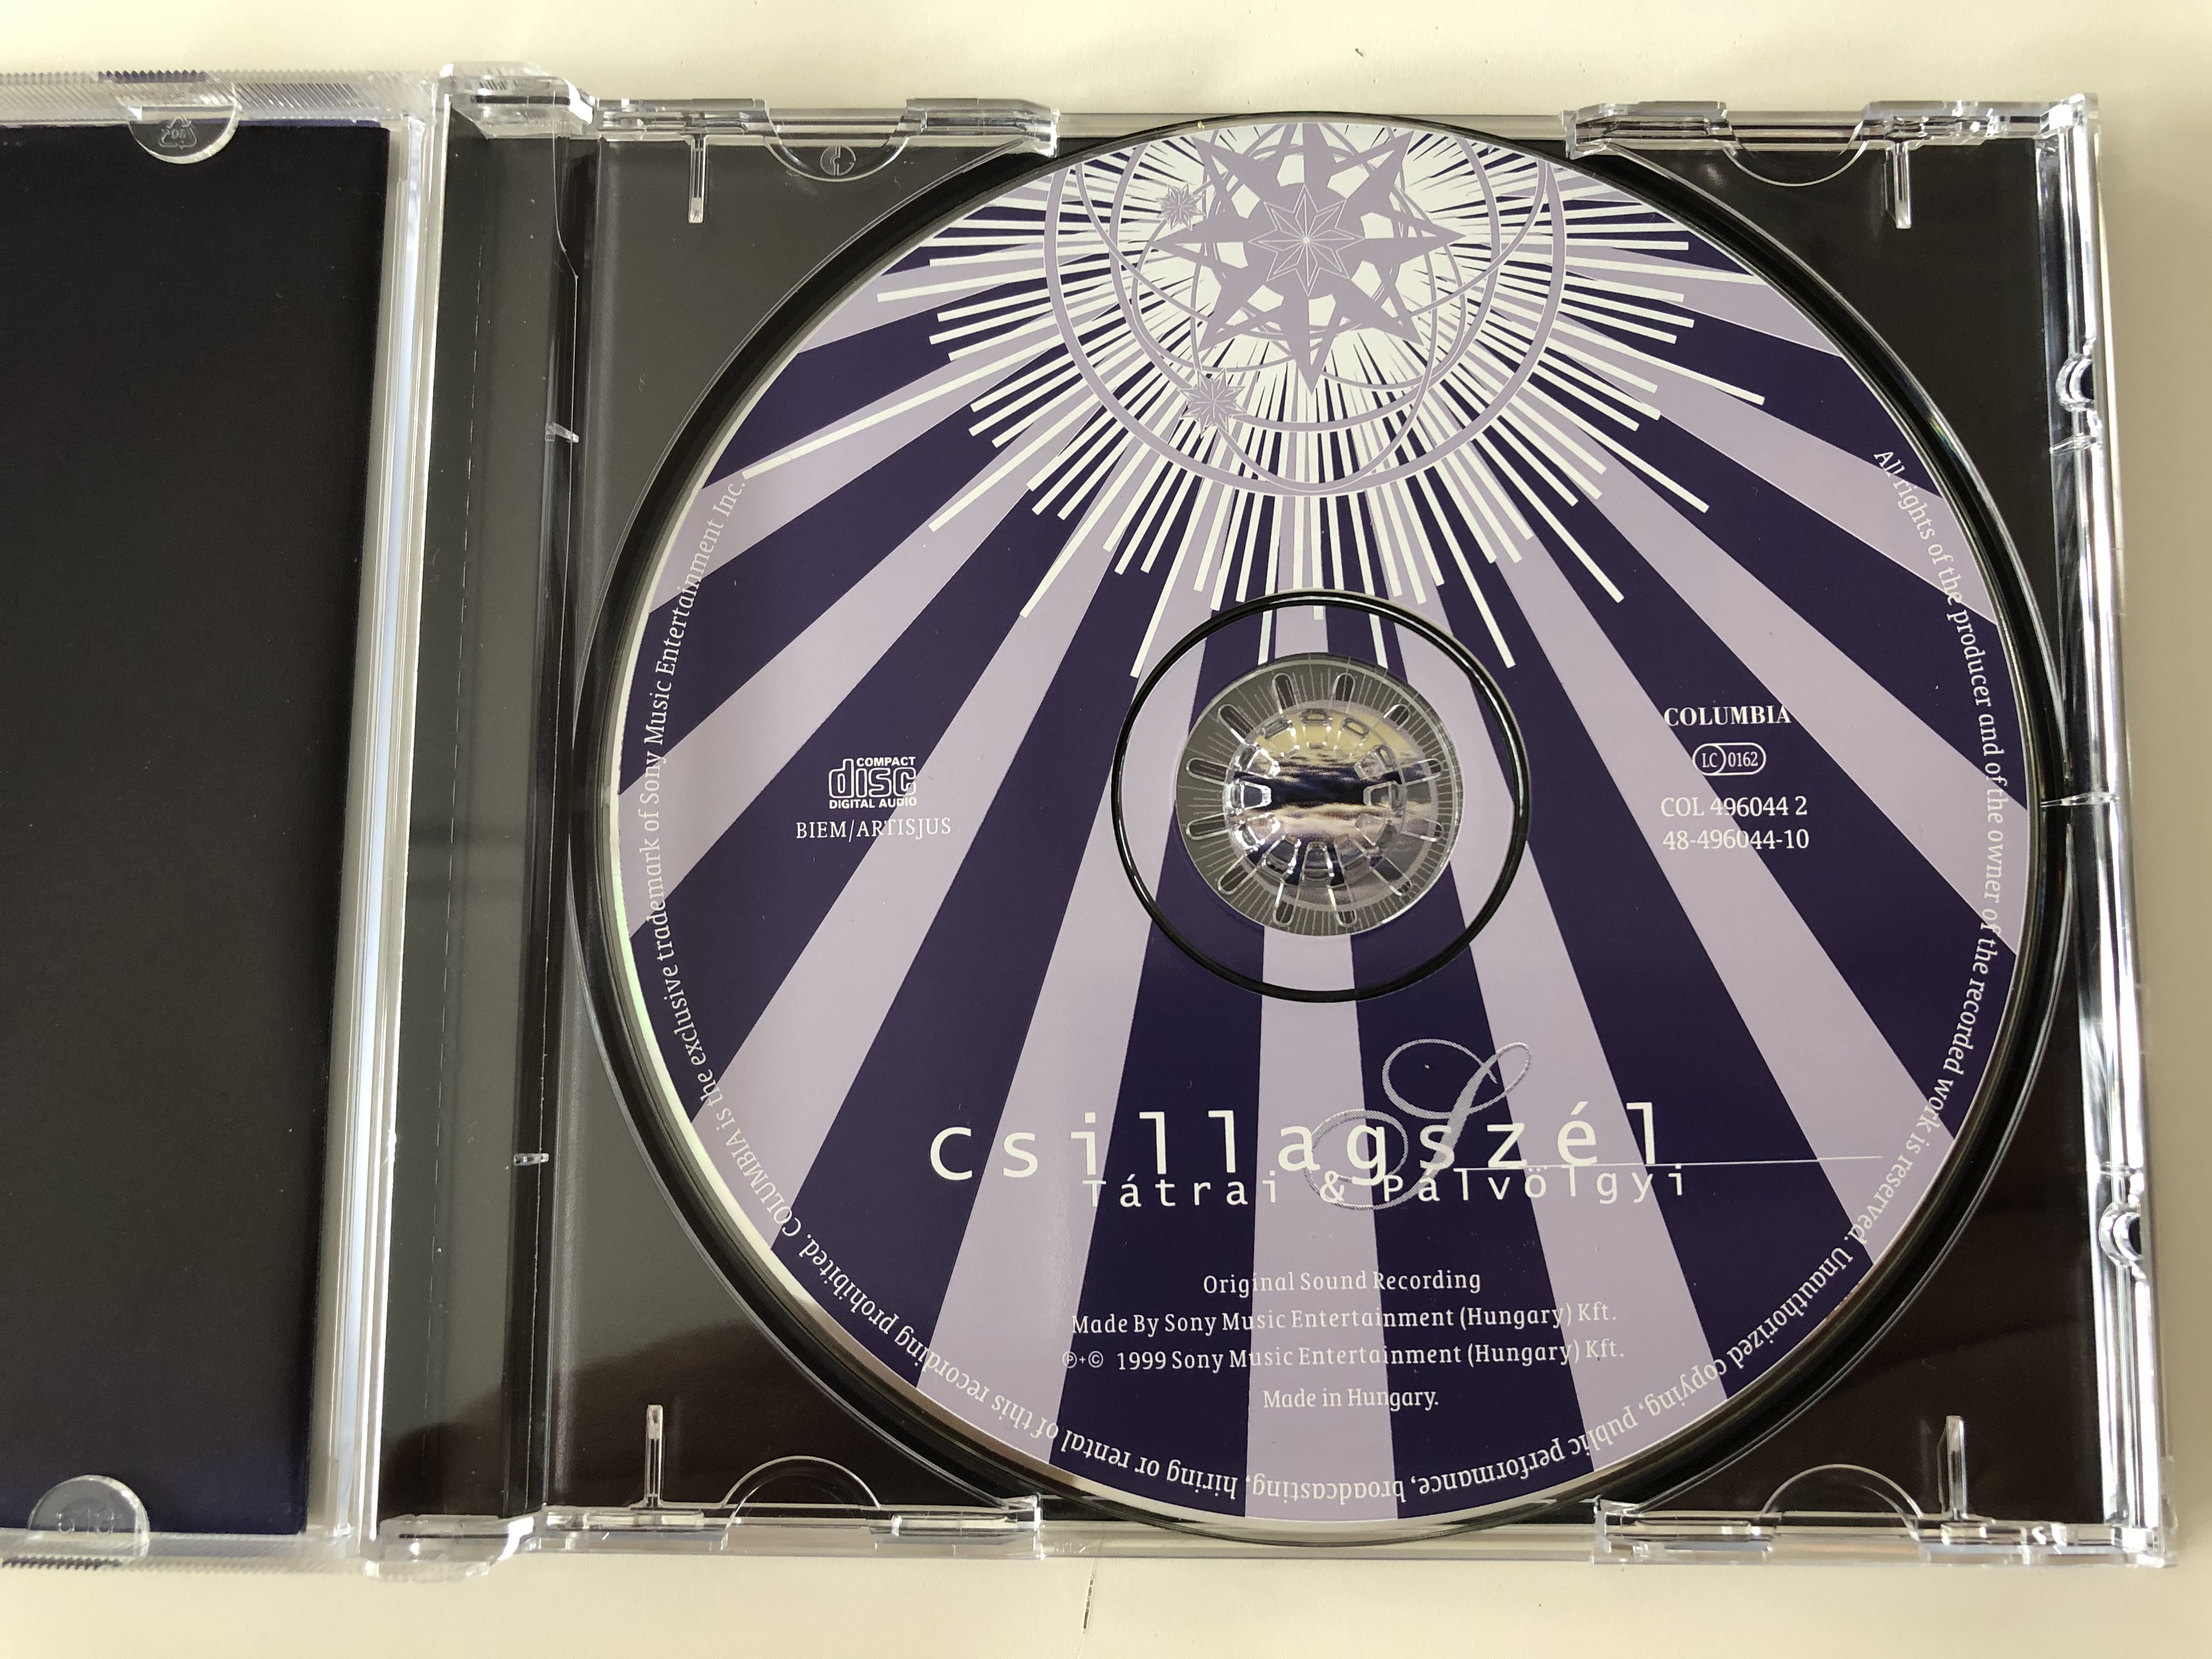 csillagsz-l-t-trai-p-lv-lgyi-columbia-audio-cd-1999-col-496044-2-6-.jpg